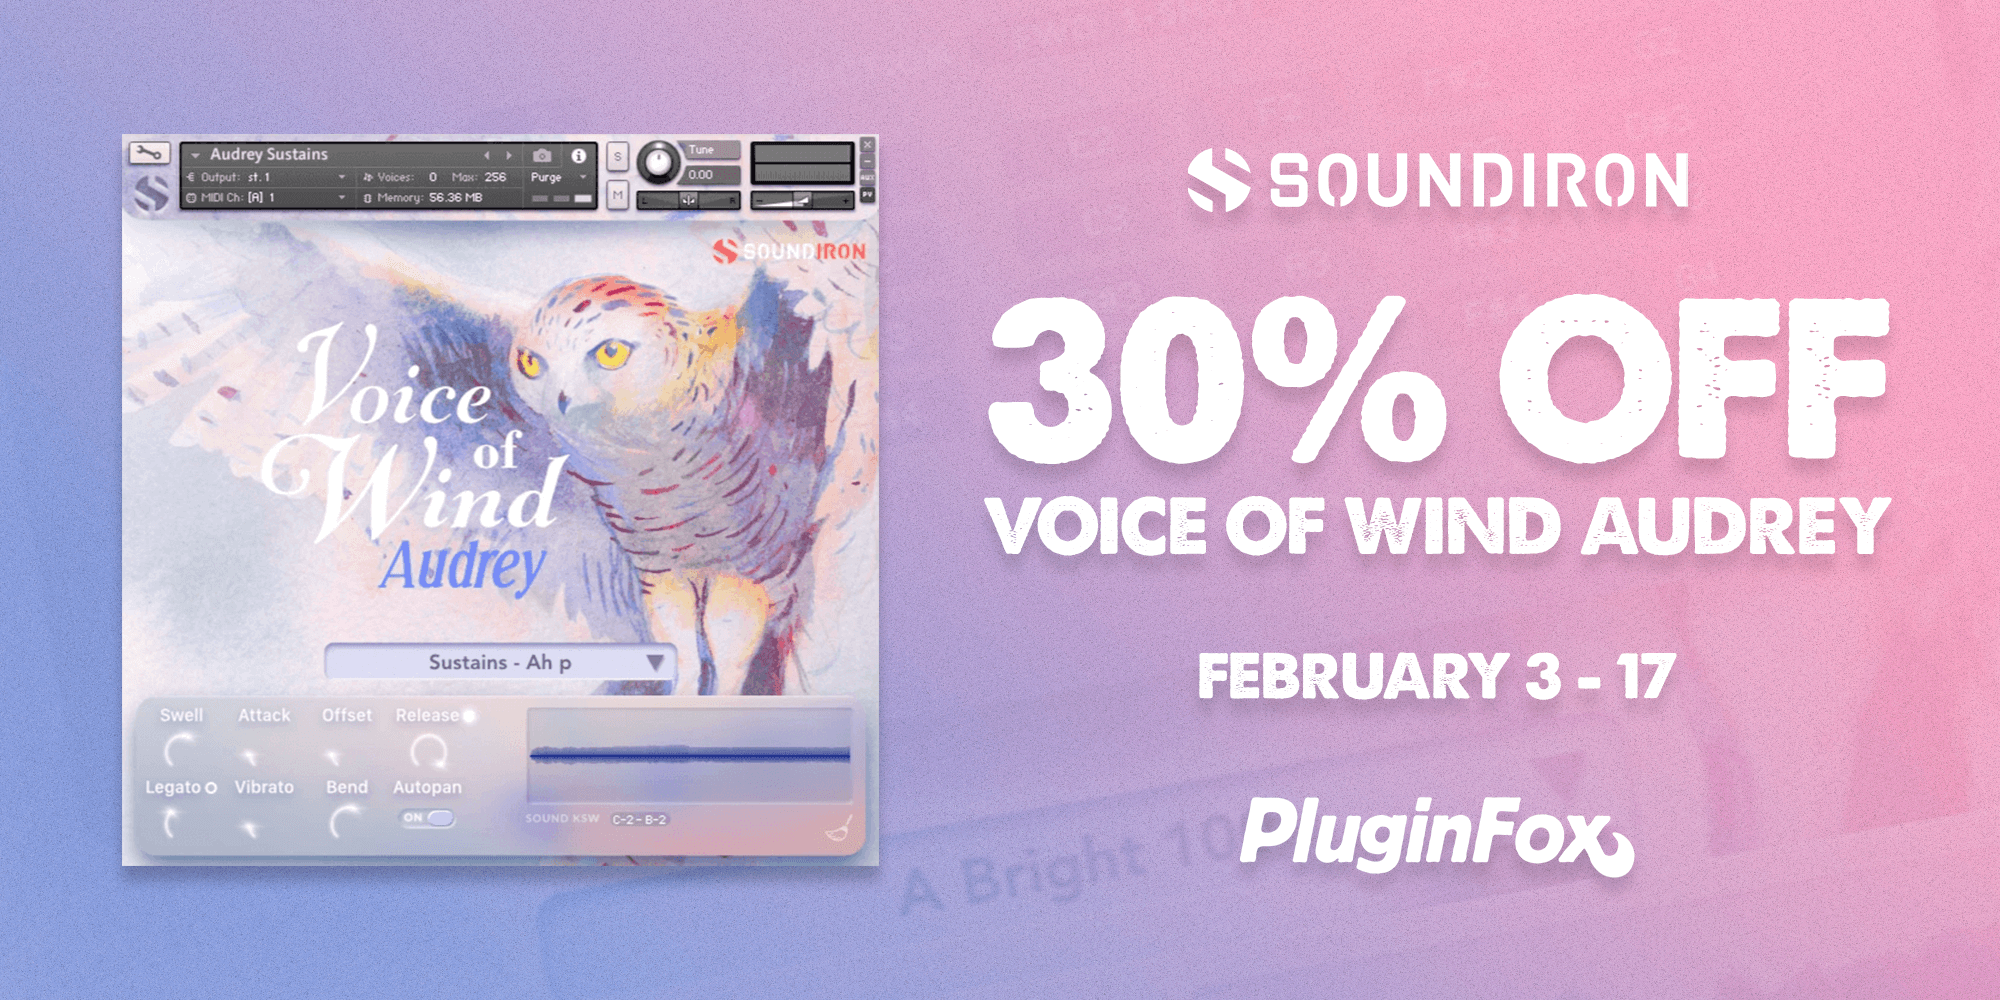 Soundiron Voice of Wind Audrey Sale - Feb 3-17